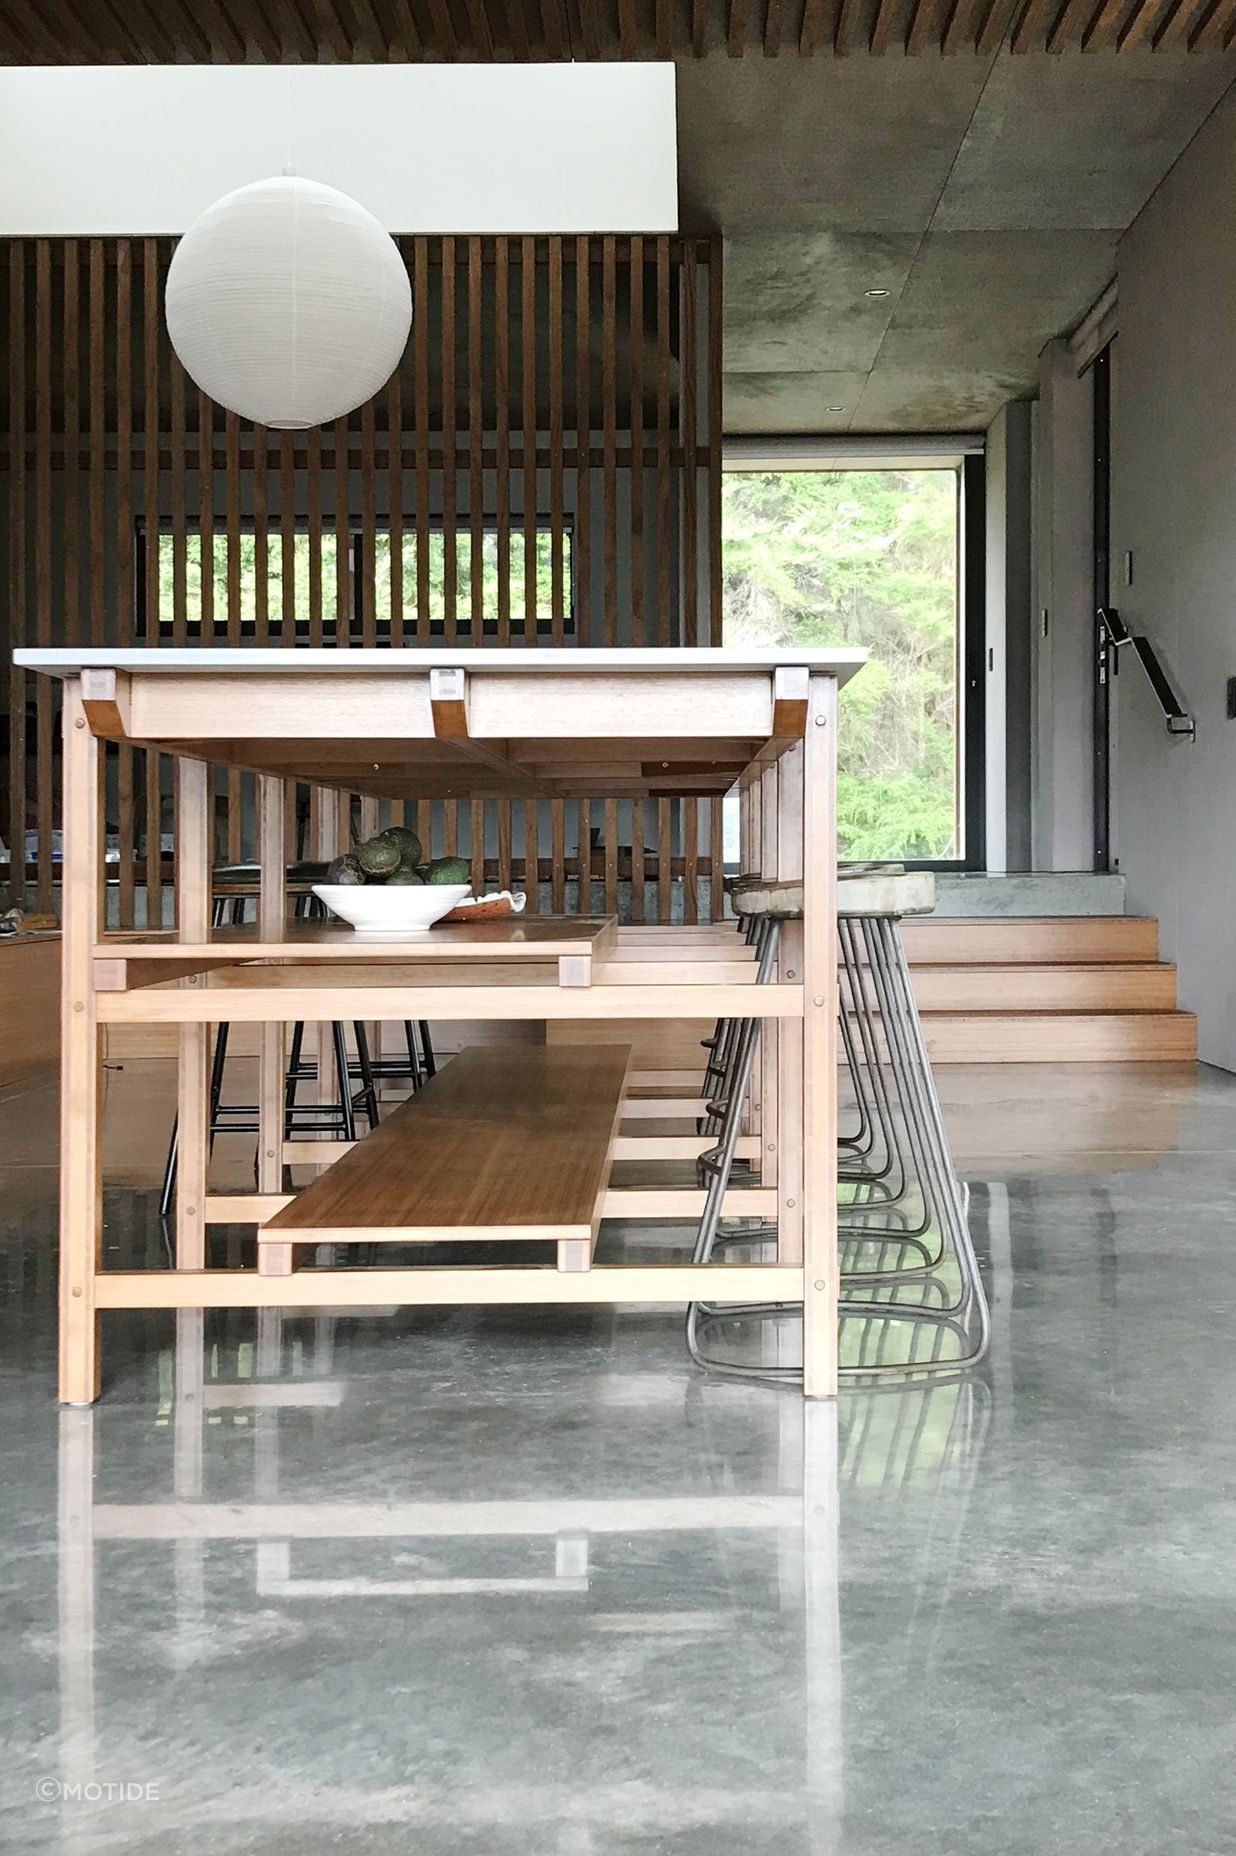 motide-bamboo-kitchen-sustainable-design-raglan-nz-1-v2.jpg